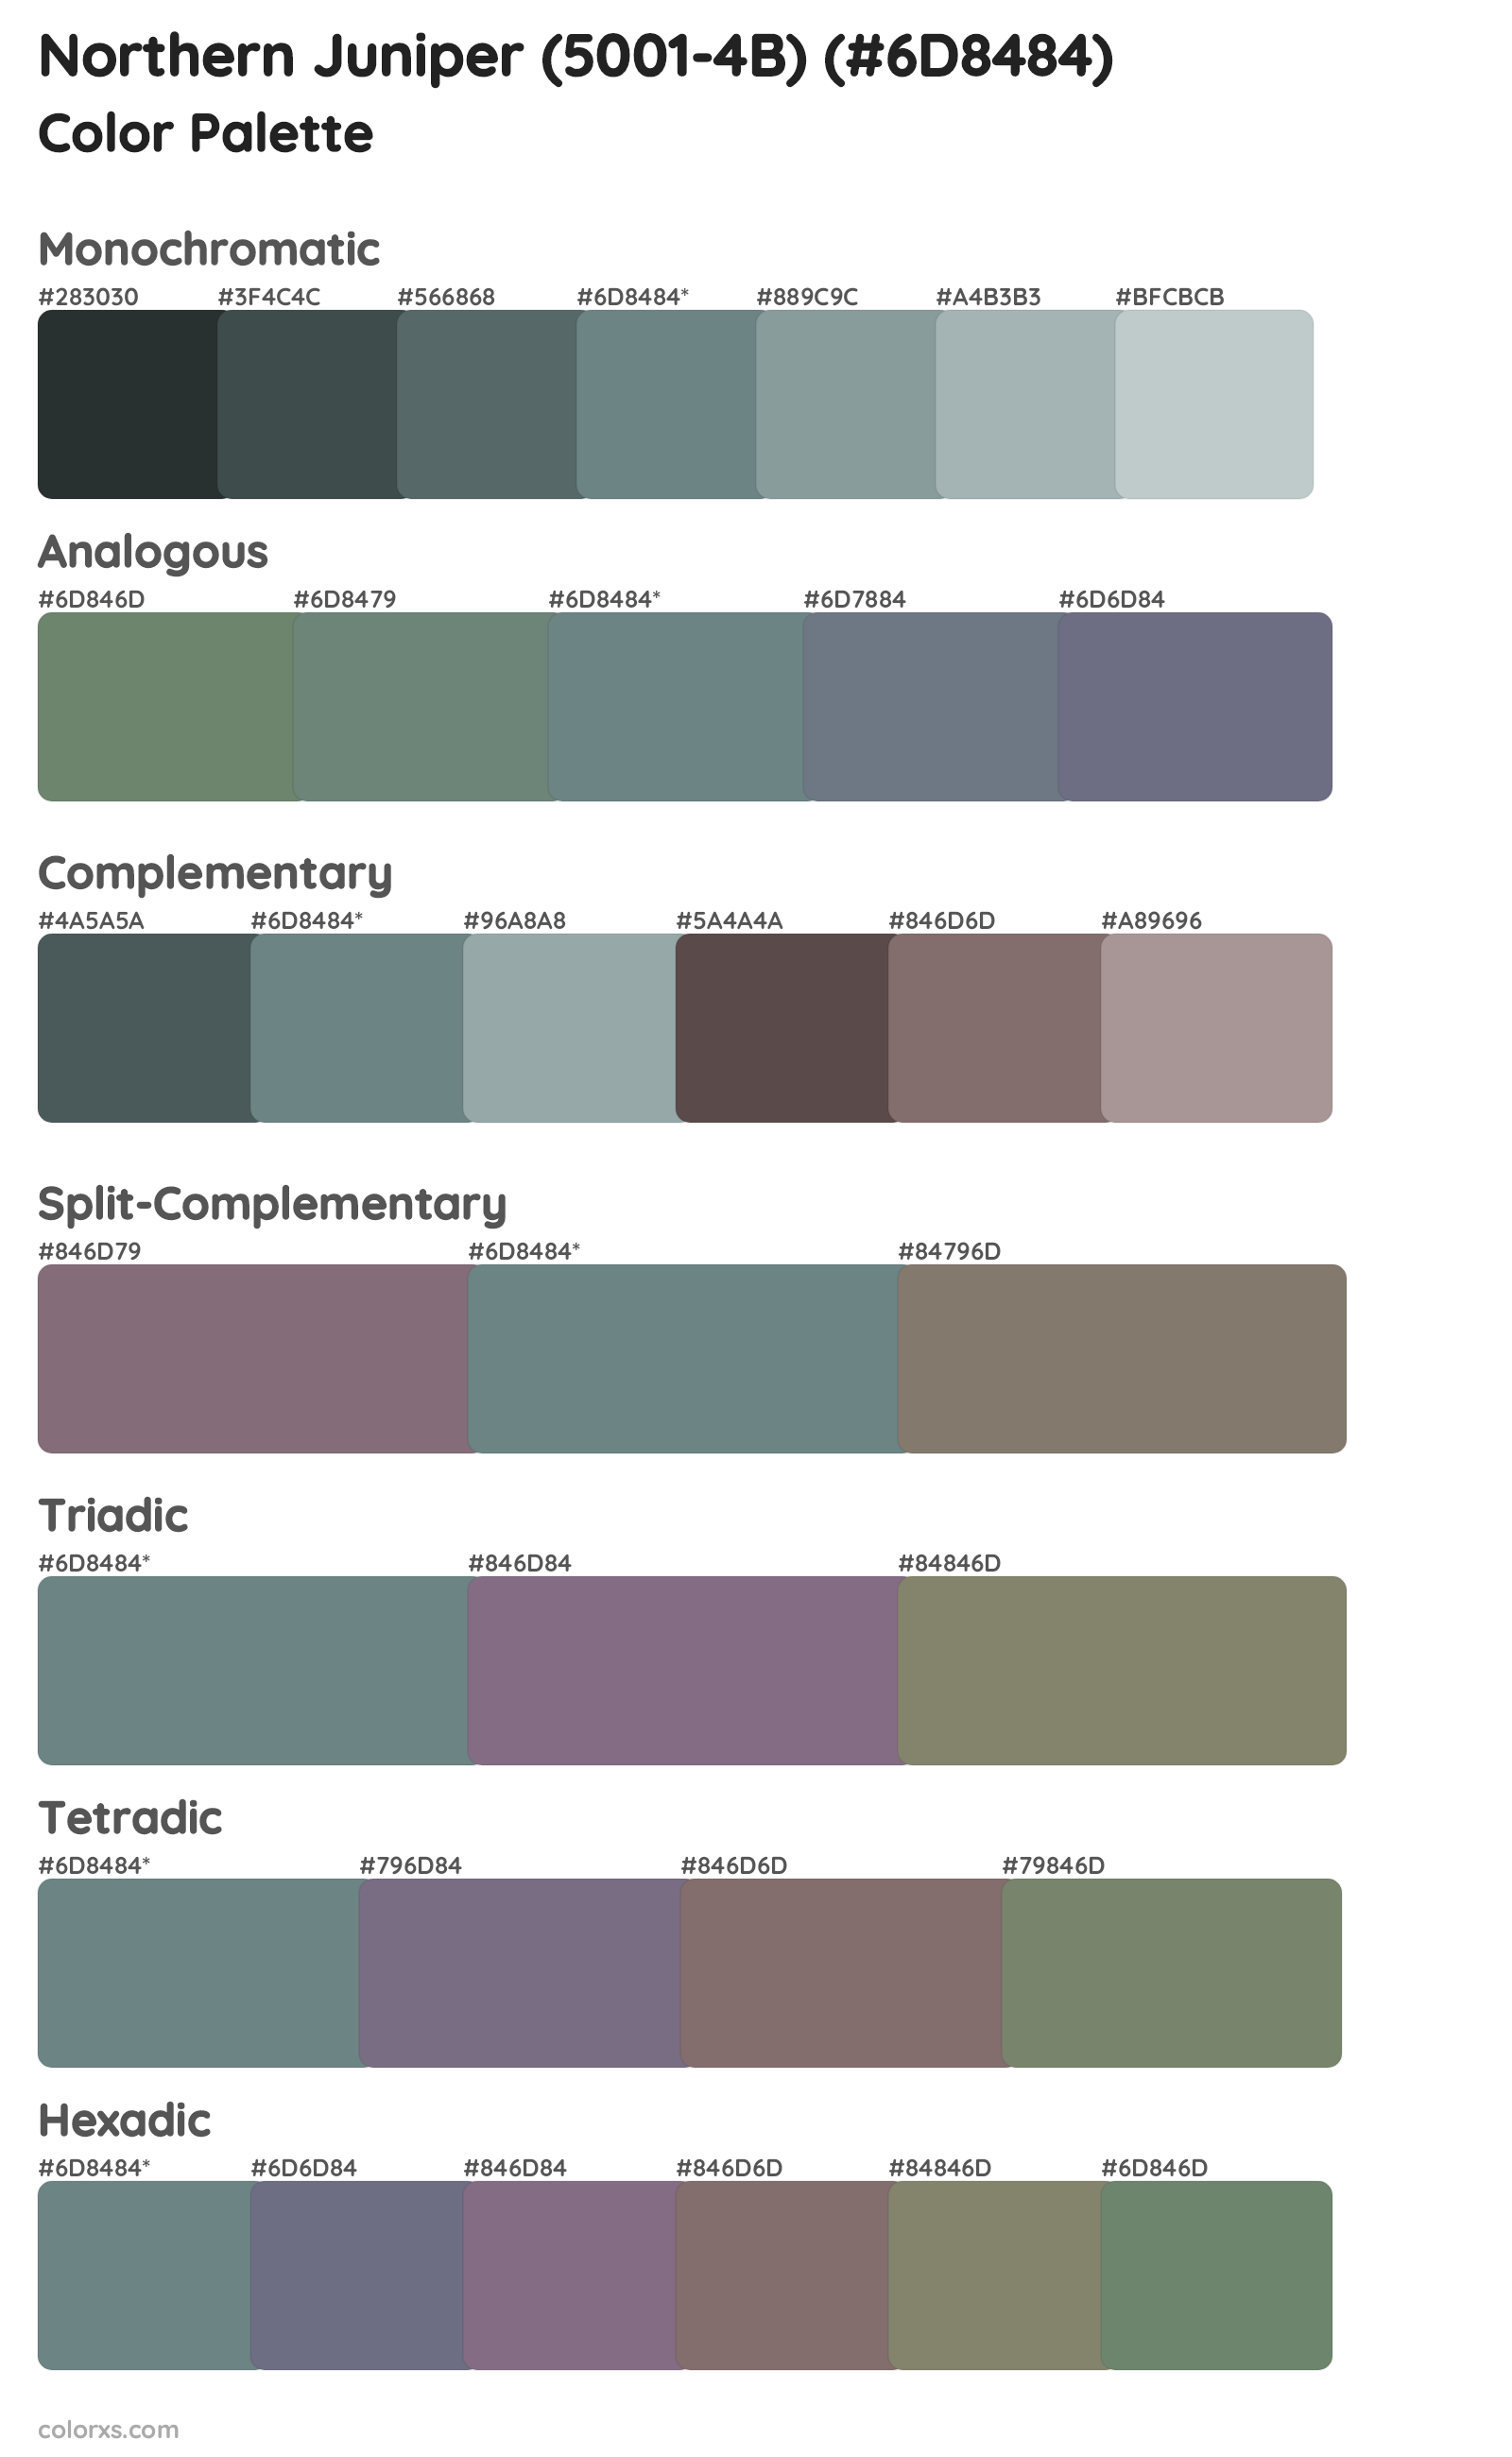 Northern Juniper (5001-4B) Color Scheme Palettes